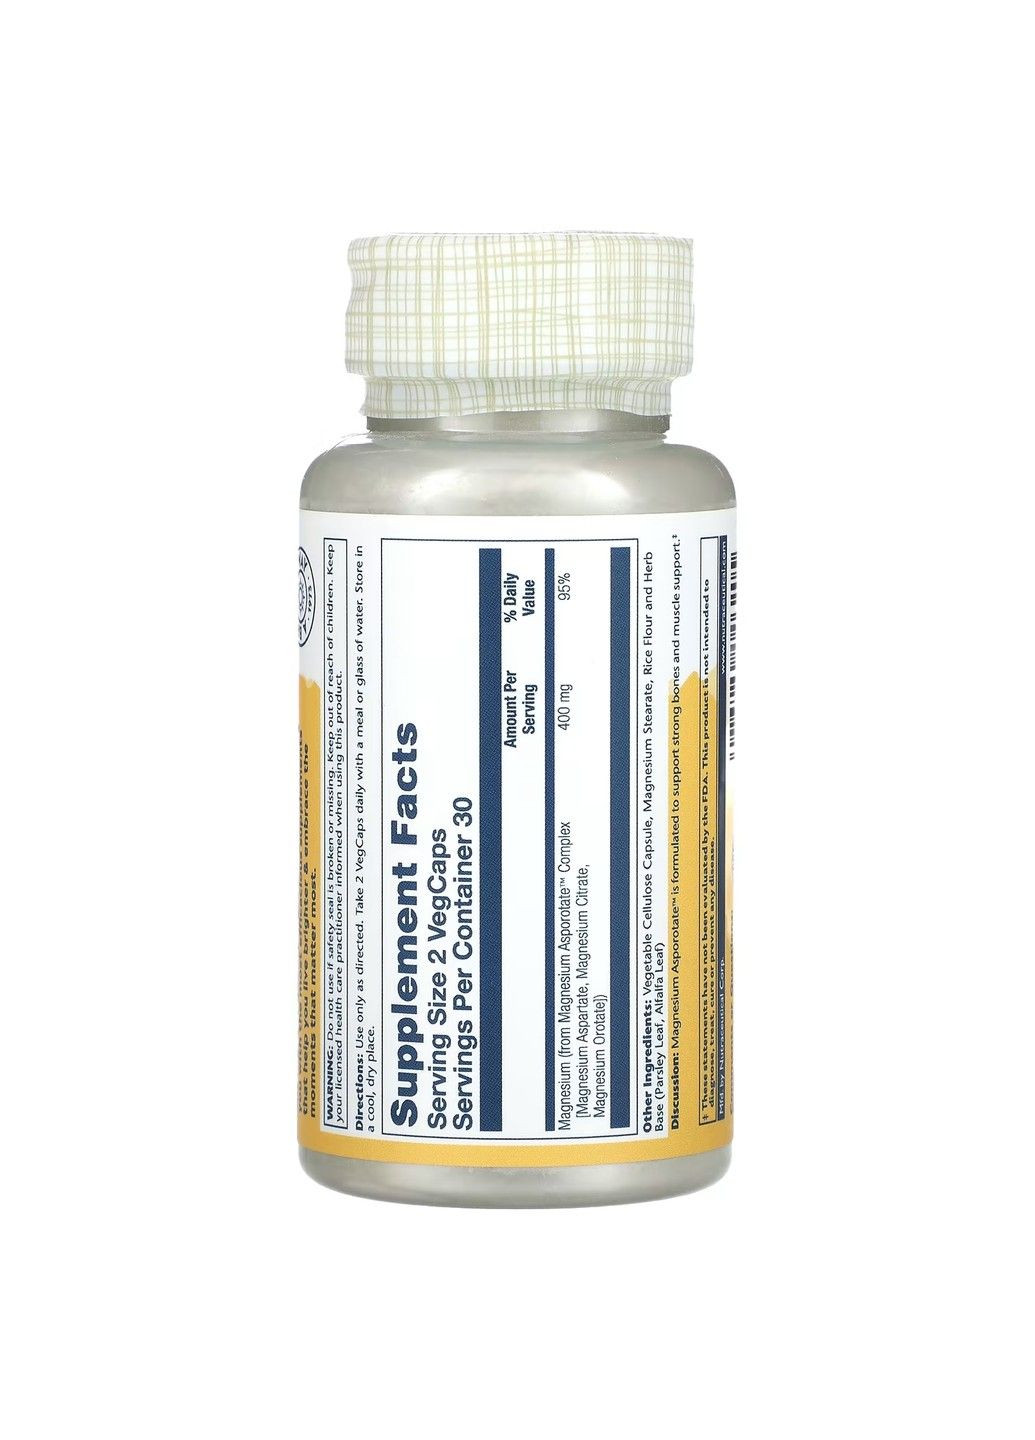 Аспартат Магния Magnesium Asporotate 400 мг - 120 вег.капсул Solaray (293516633)